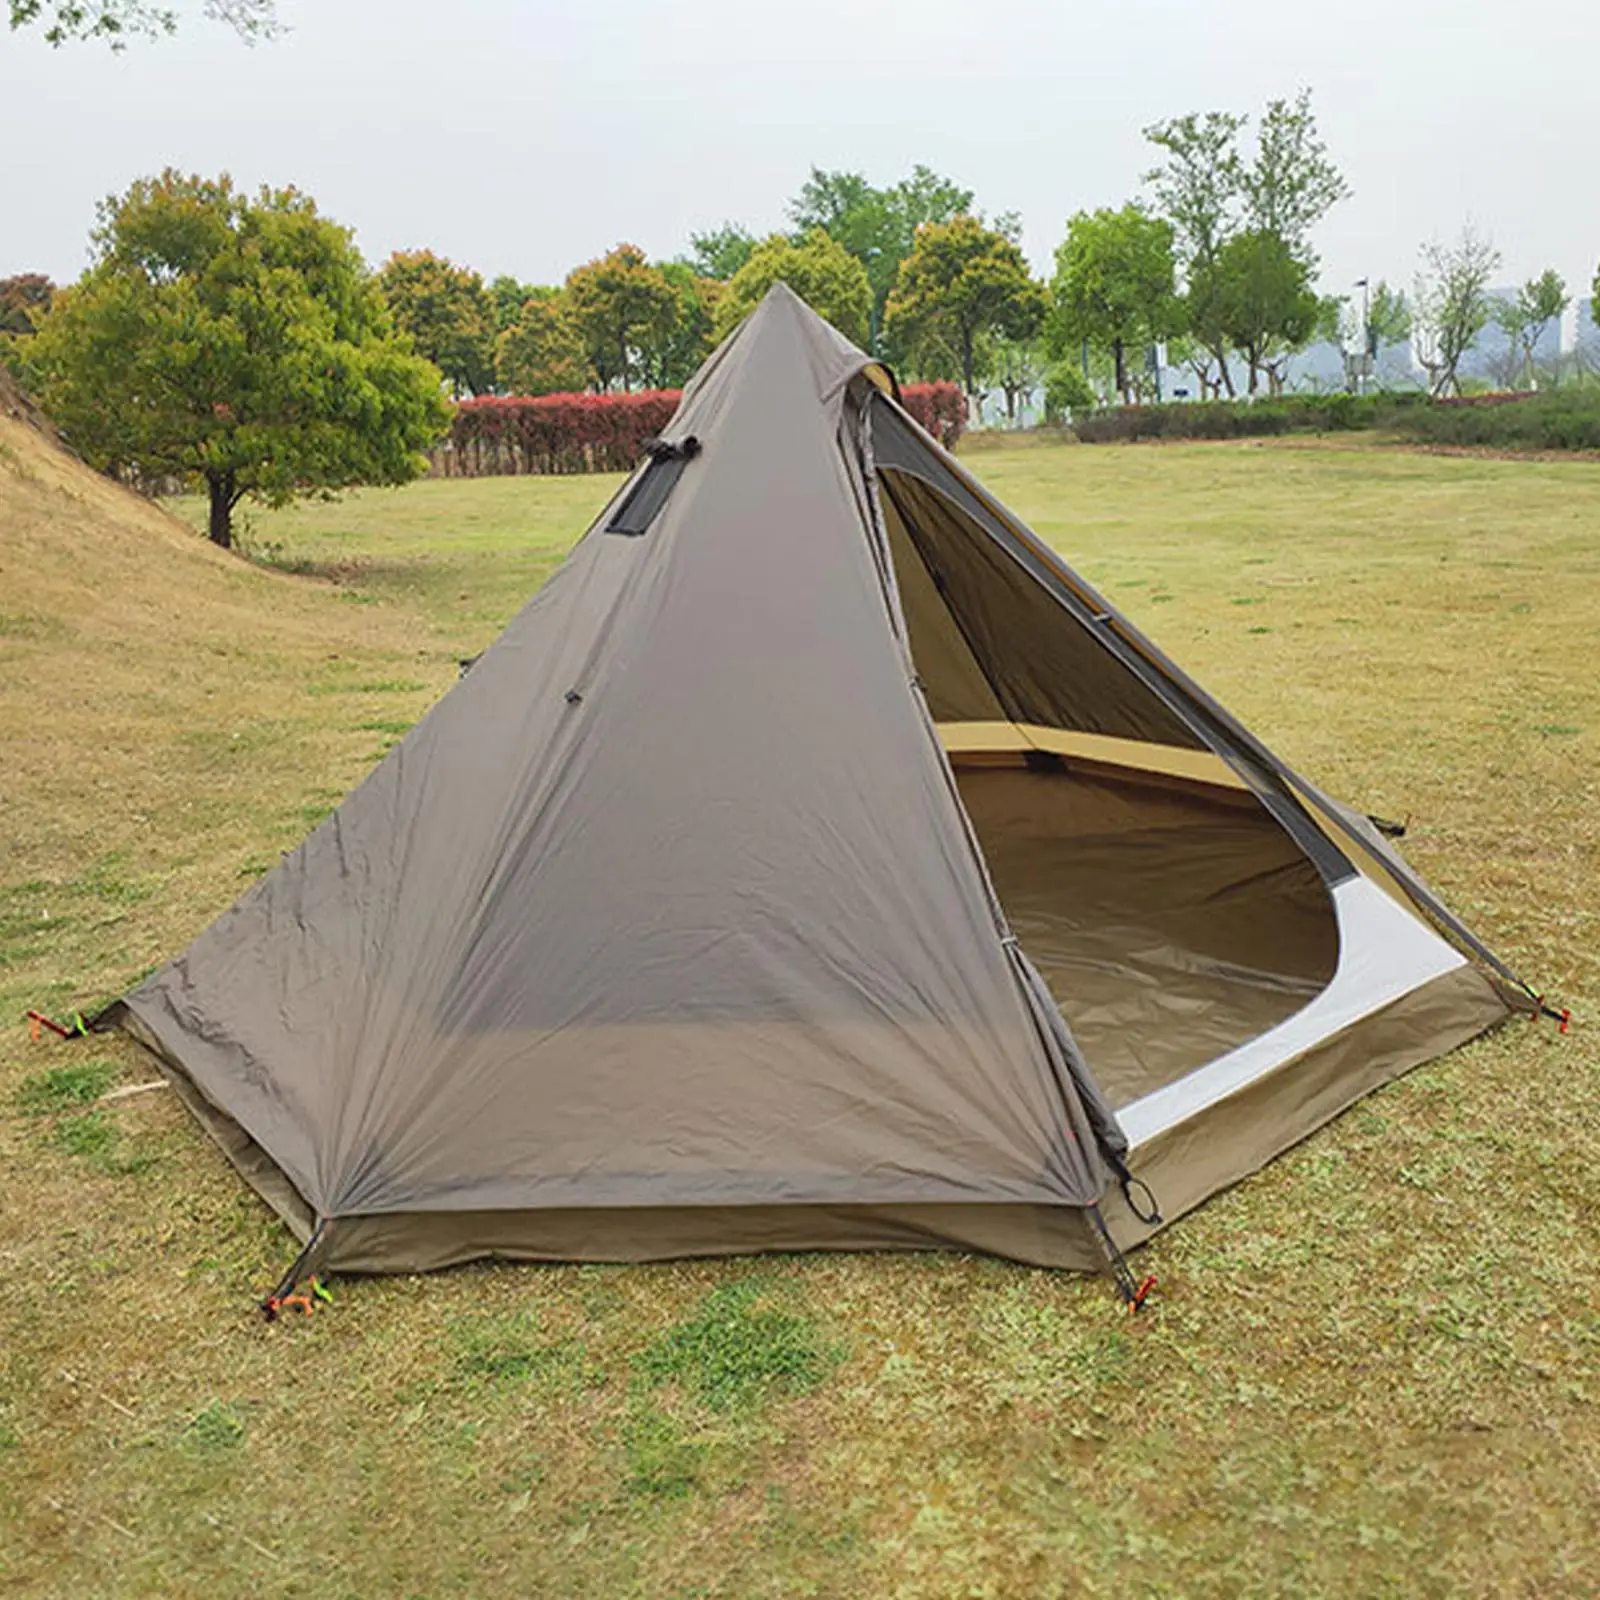 Lightweight Pyramid Hot Tent Camping  Mesh Tent for Travel Trekking